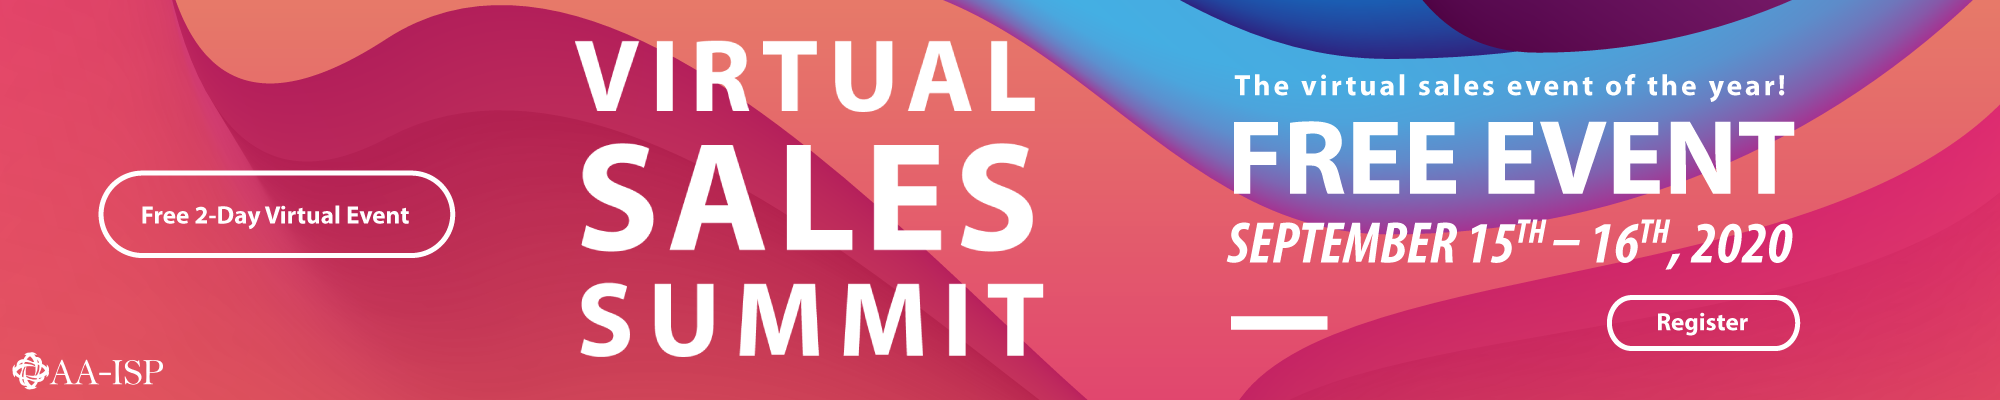 https://www.aa-isp.org/virtual-sales-summit